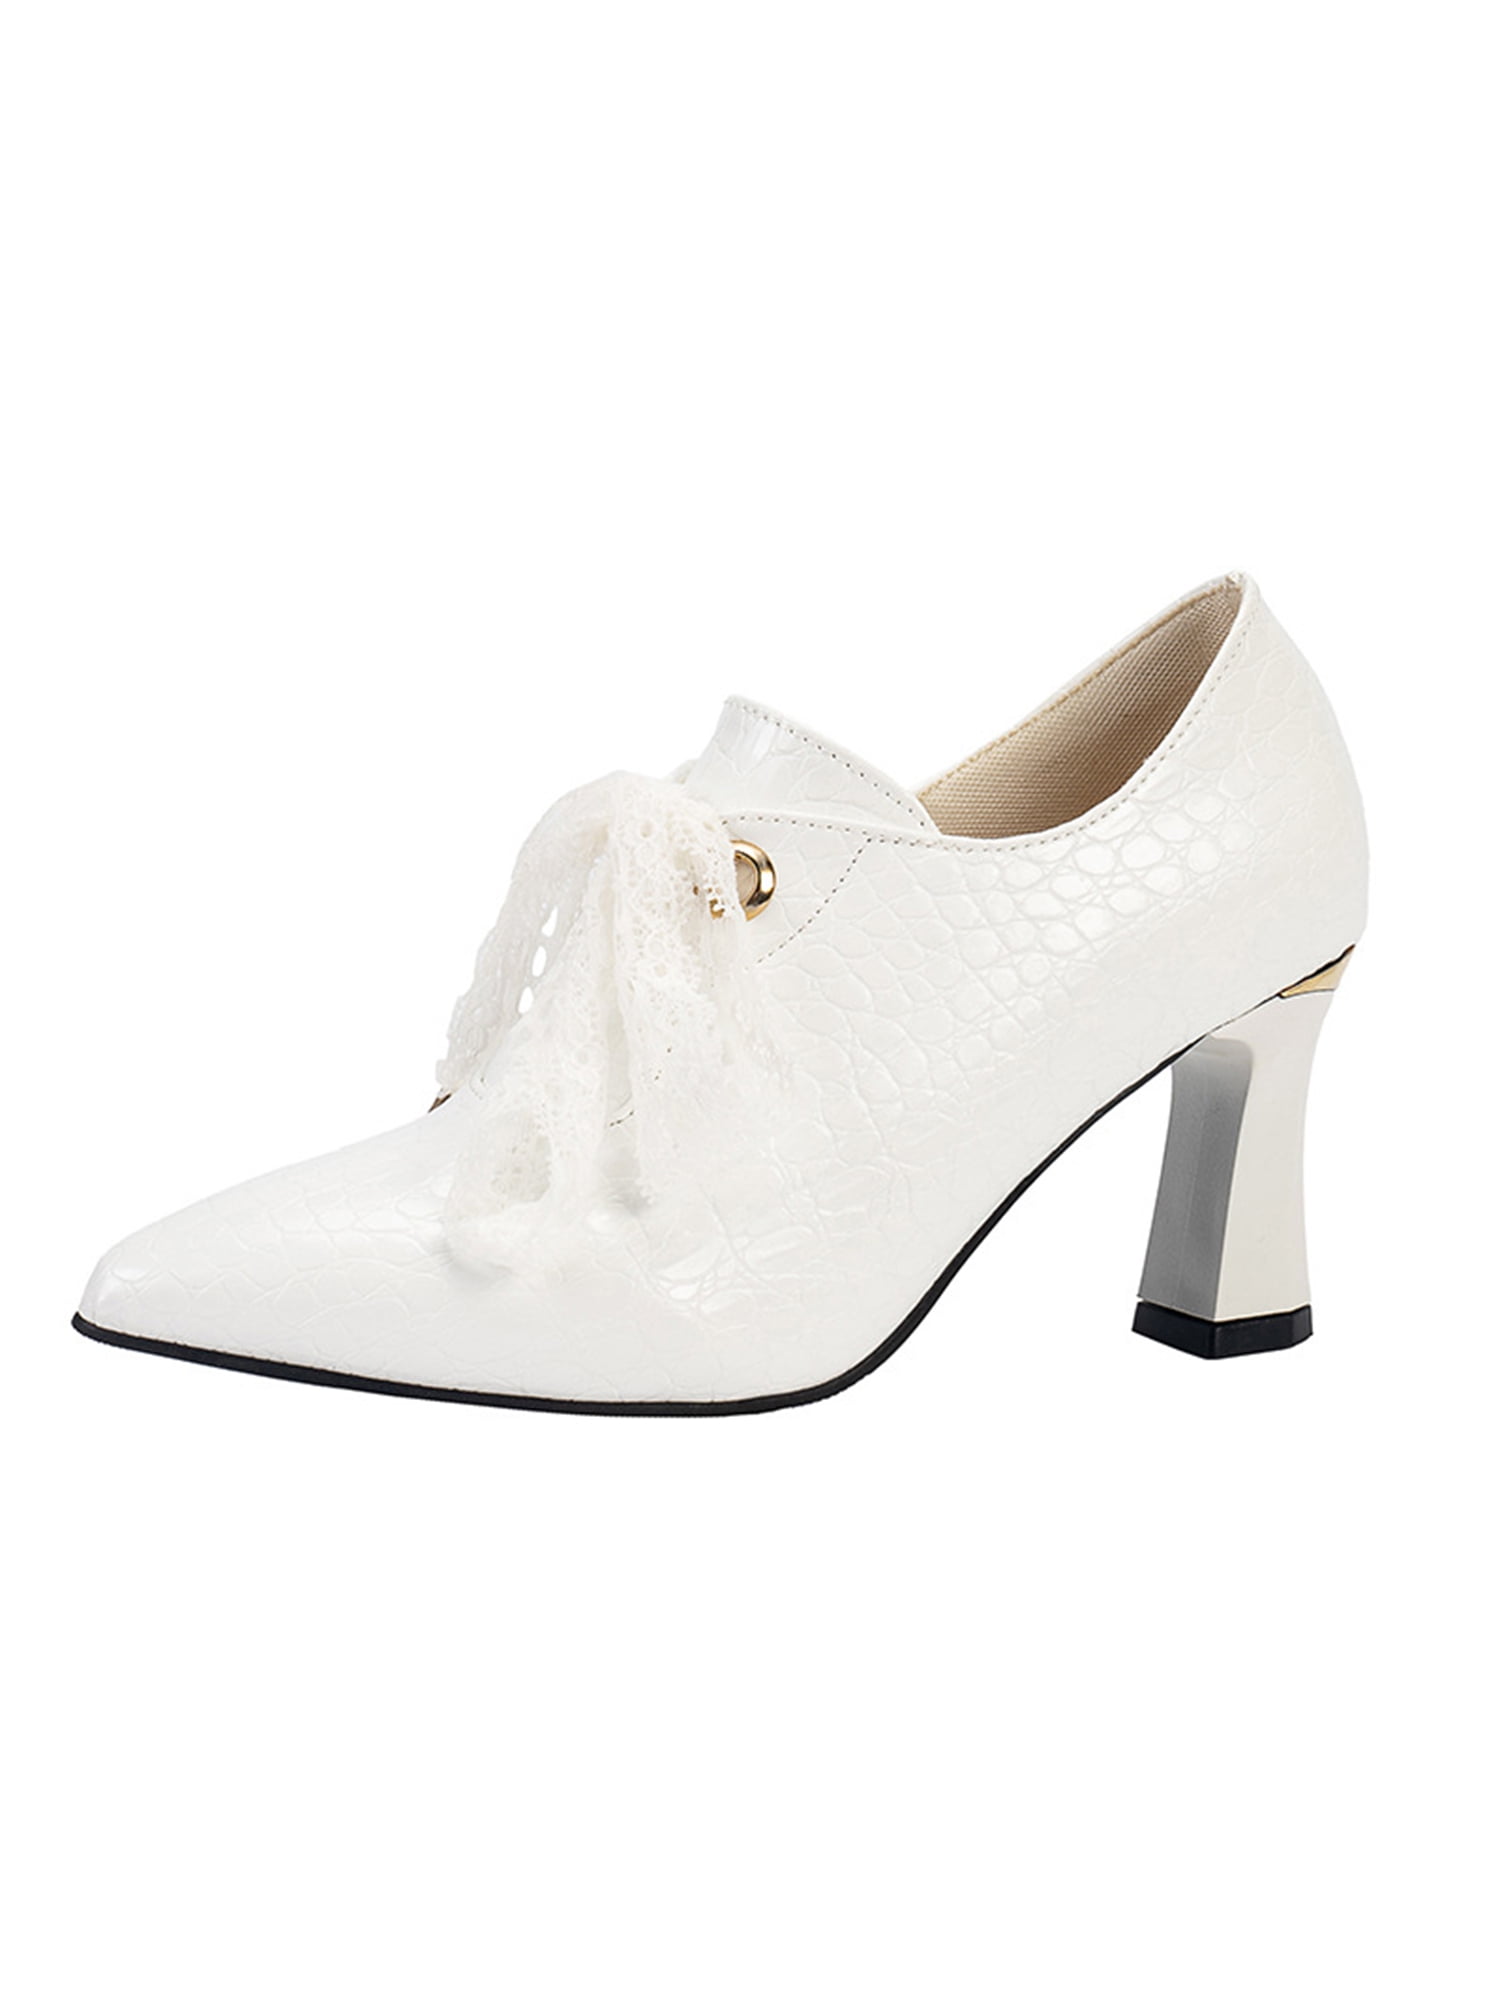 Off-White | Shoes | Off White Virgil Abloh Zip Tie Heels | Poshmark